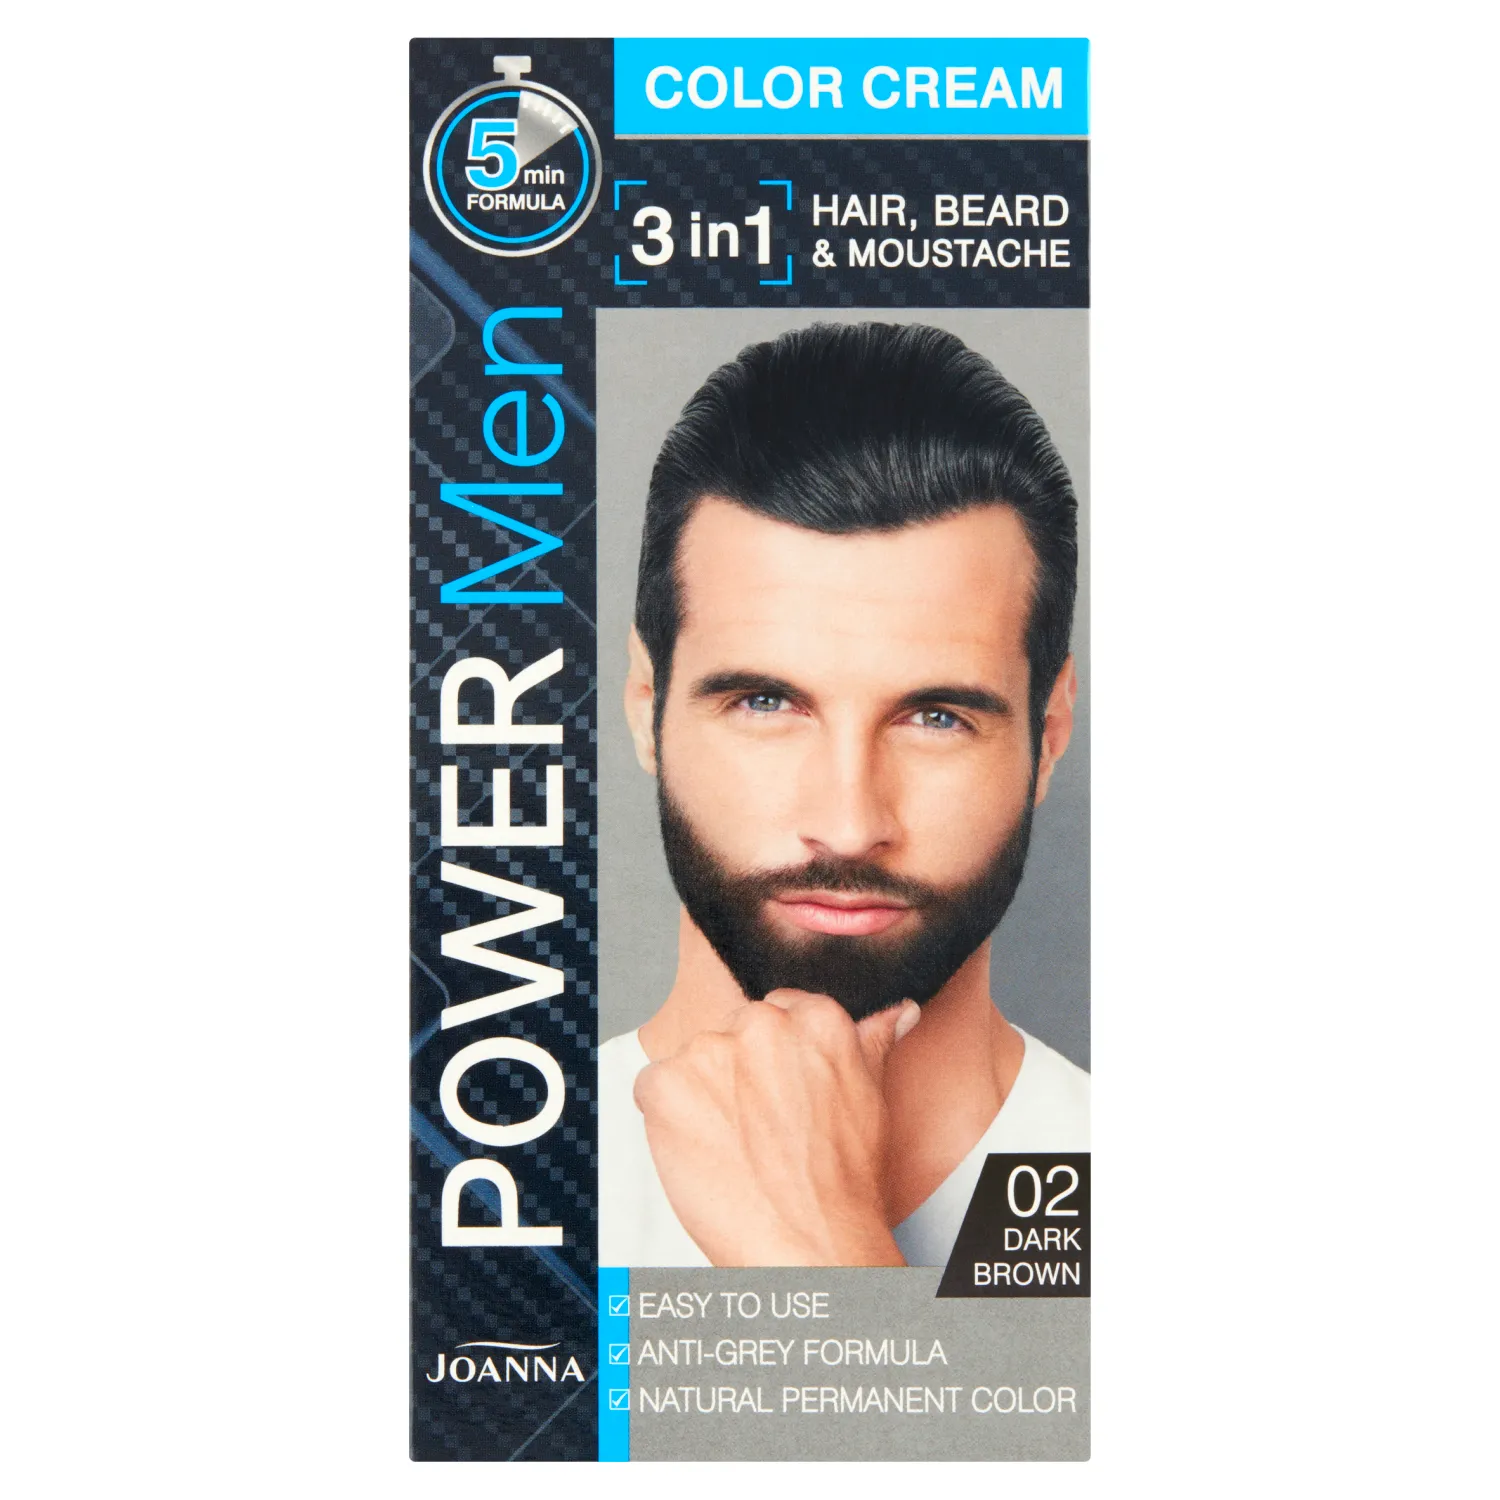 Joanna Power Men Color farba do włosów i brody dark brown 02, 100 g